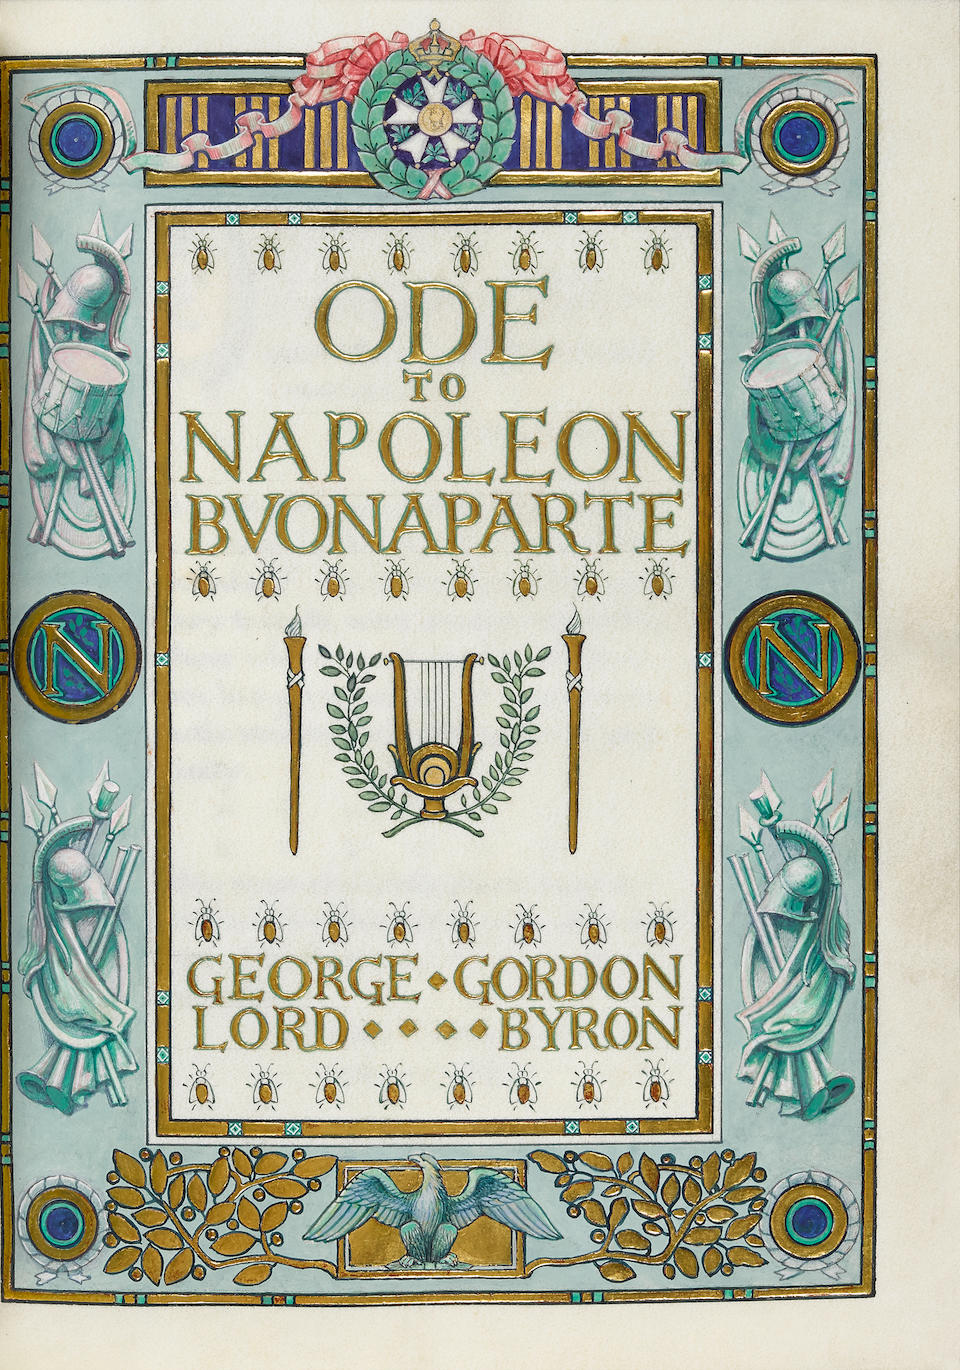 SANGORSKI & SUTCLIFFE: JEWELLED BINDING BYRON, LORD [GEORGE GORDON]. An illuminated manuscript on vellum, being Byron's Ode to Napoleon,